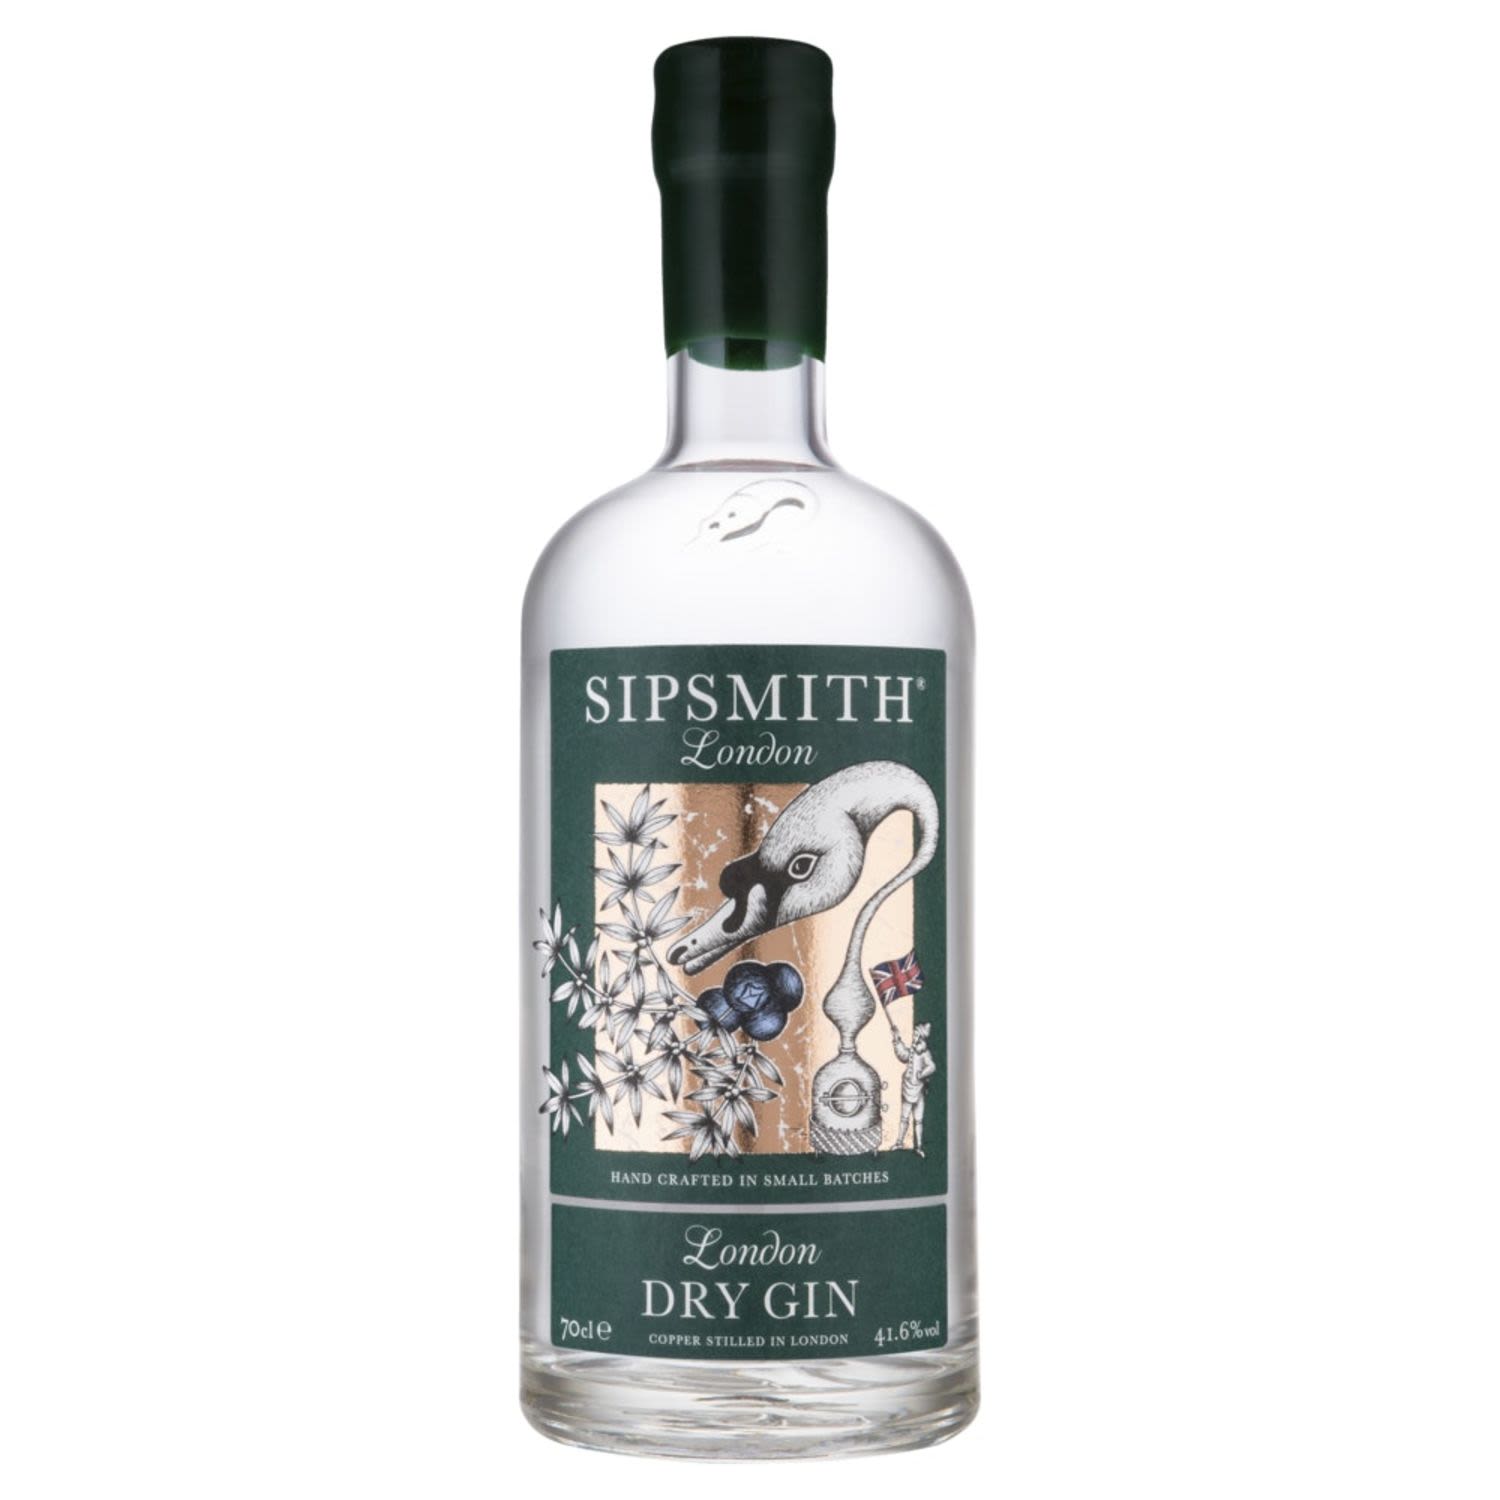 Sipsmith London Dry Gin 700mL Bottle